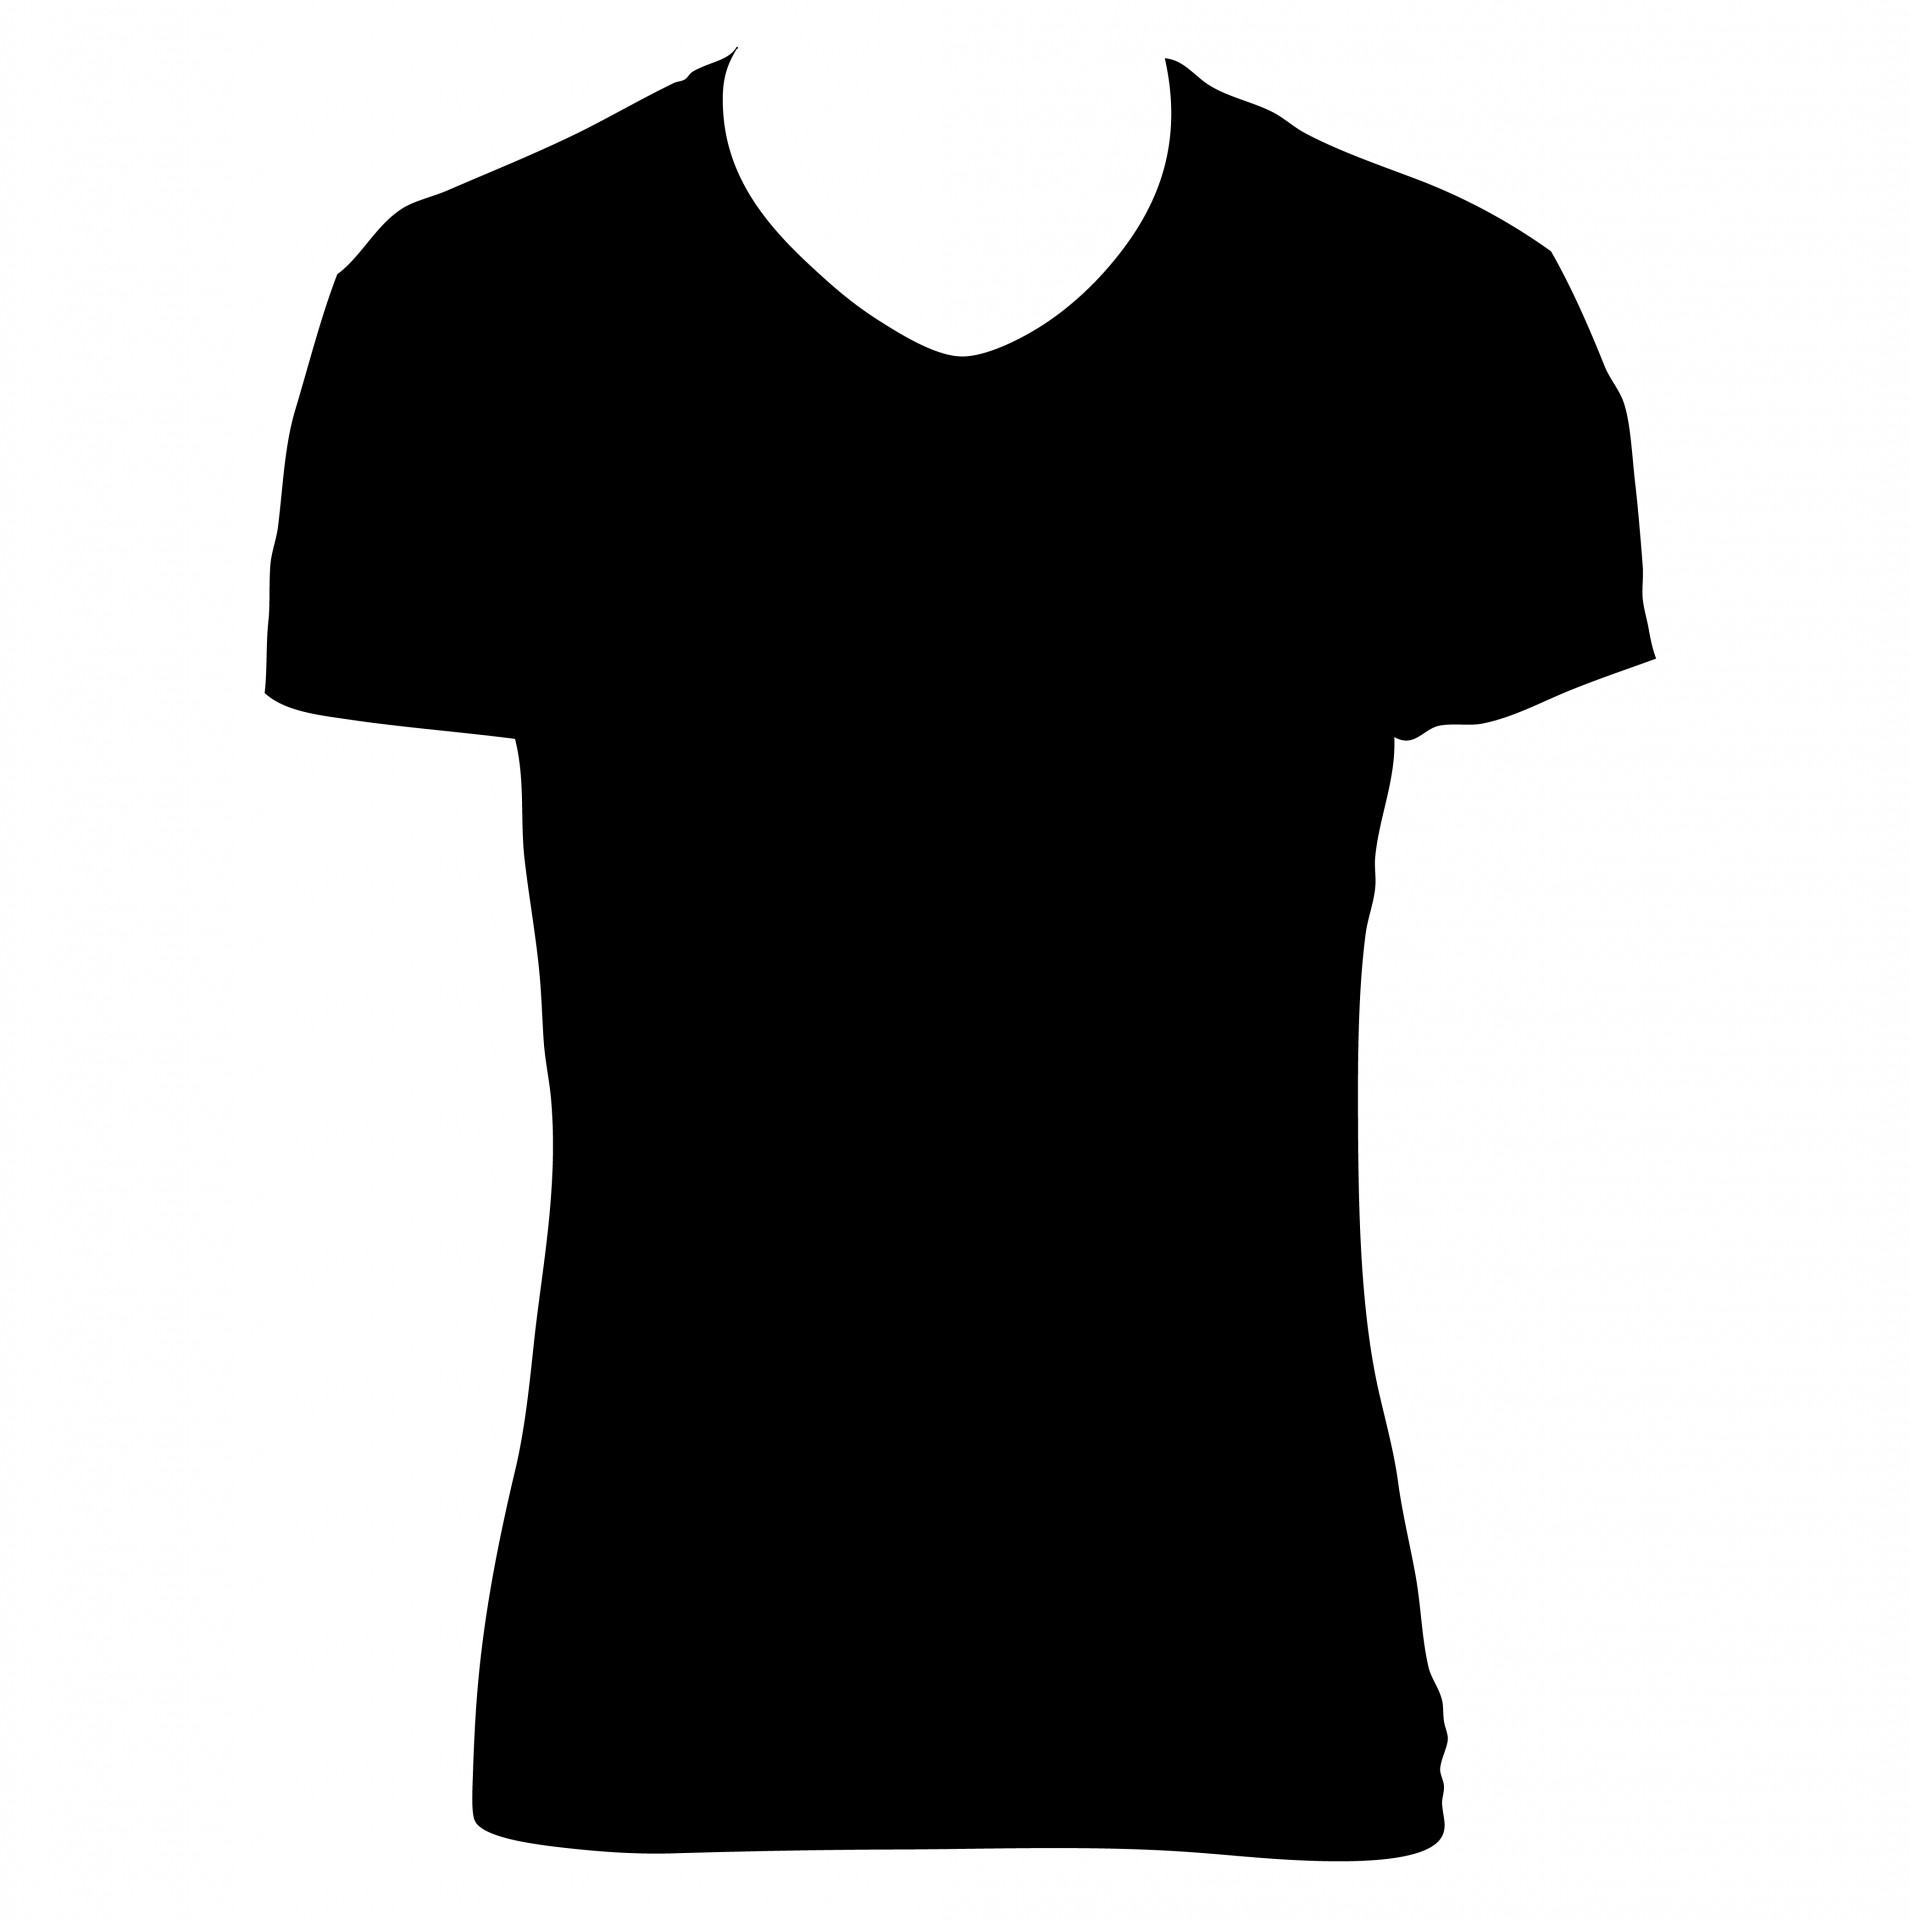 Аватарки майки. Футболка. Черная футболка. Черная футболка макет. Черная футболка на белом фоне.